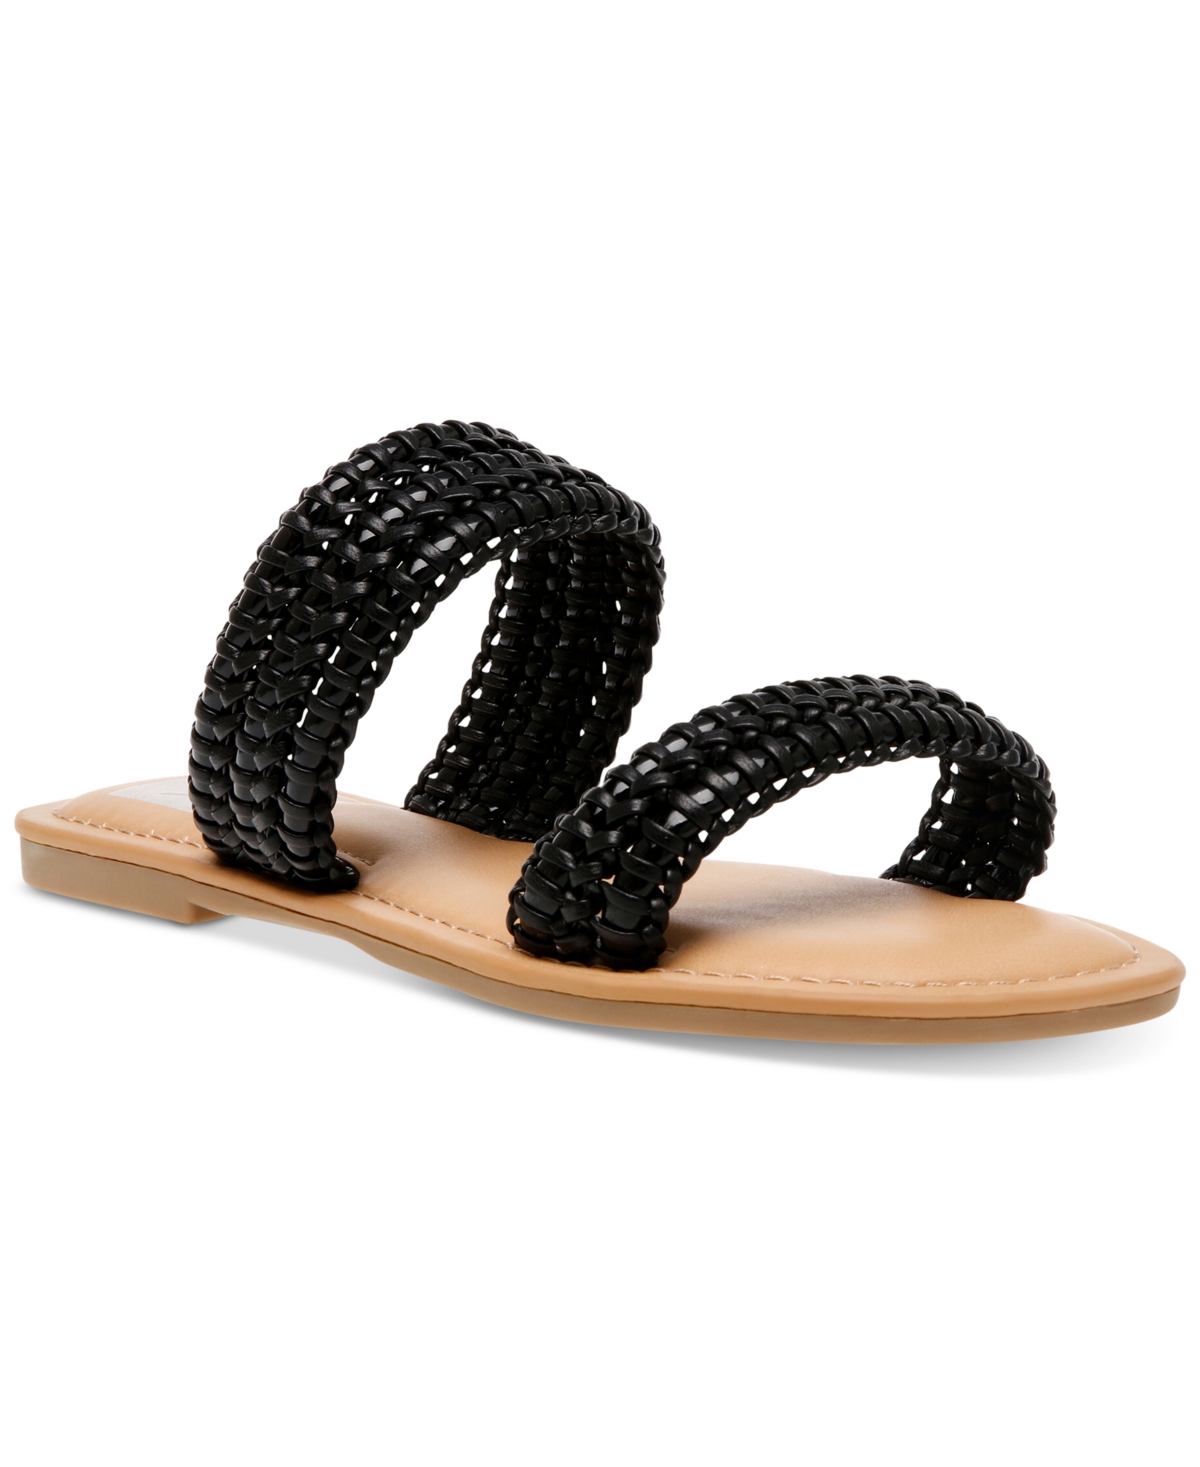 Women's Joolip Woven Slide Sandals - Black